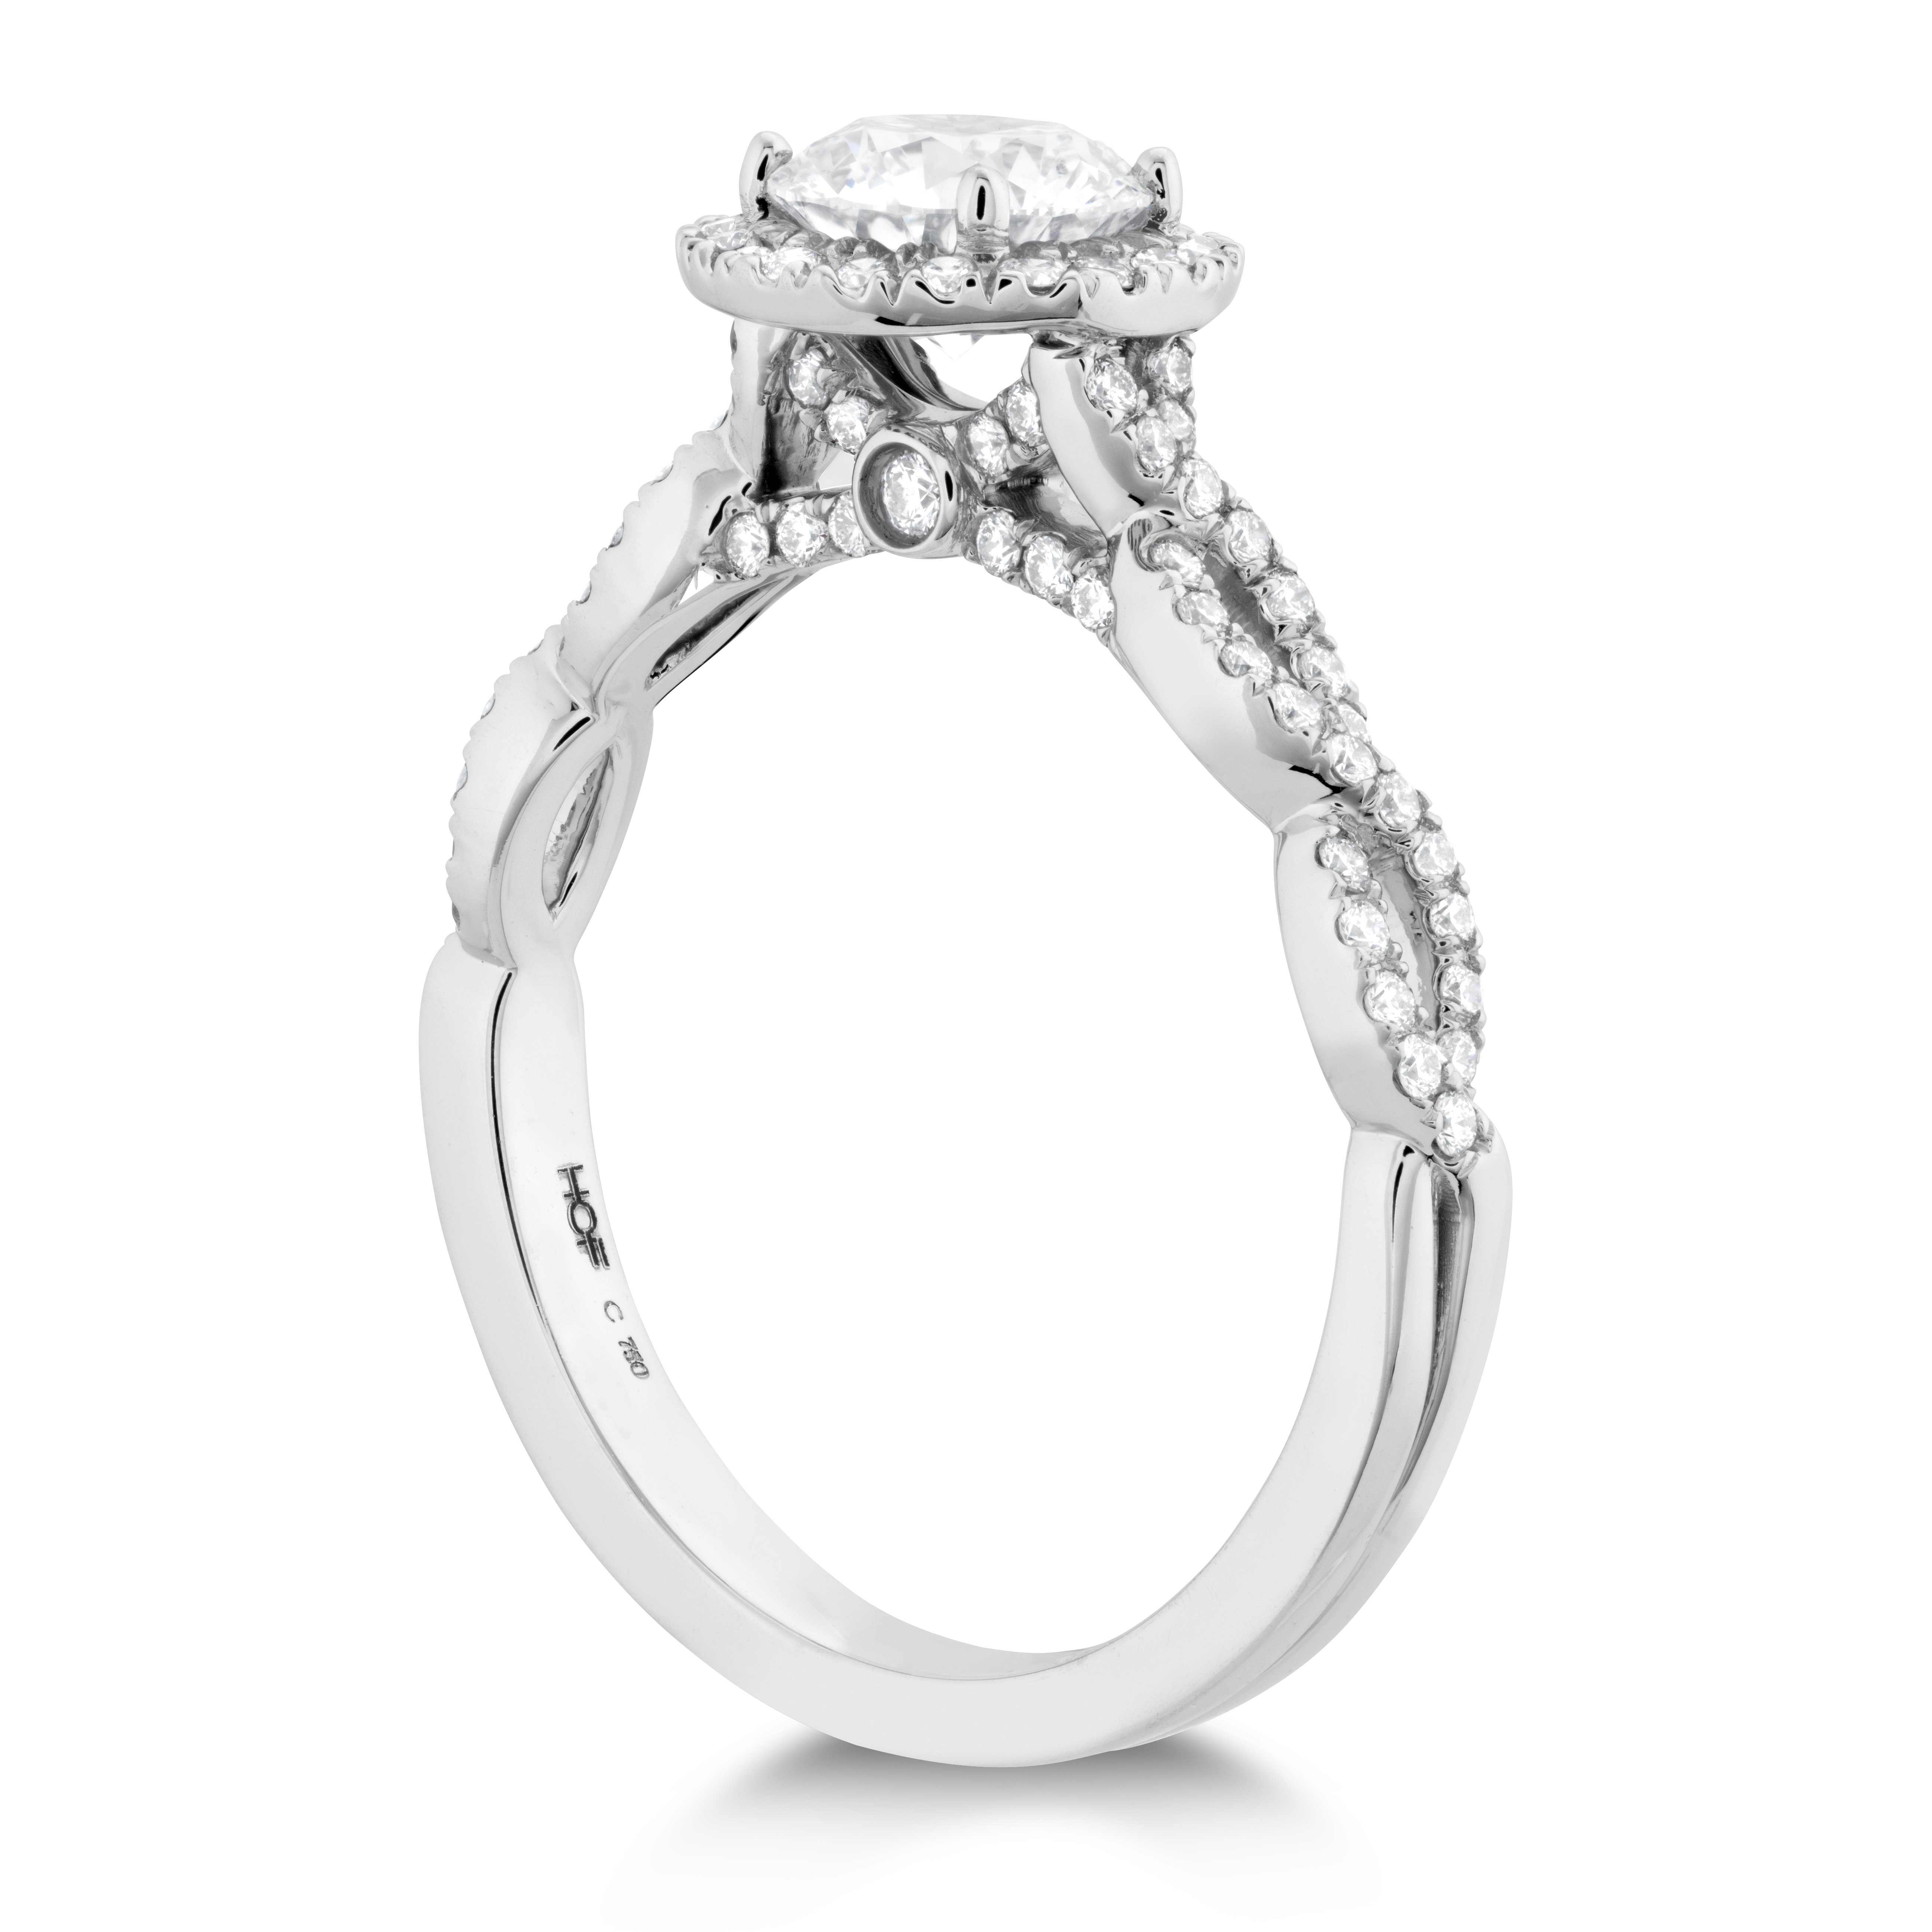 https://www.arthursjewelers.com/content/images/thumbs/Original/Destiny Lace Halo Ring_1-19361872.jpg